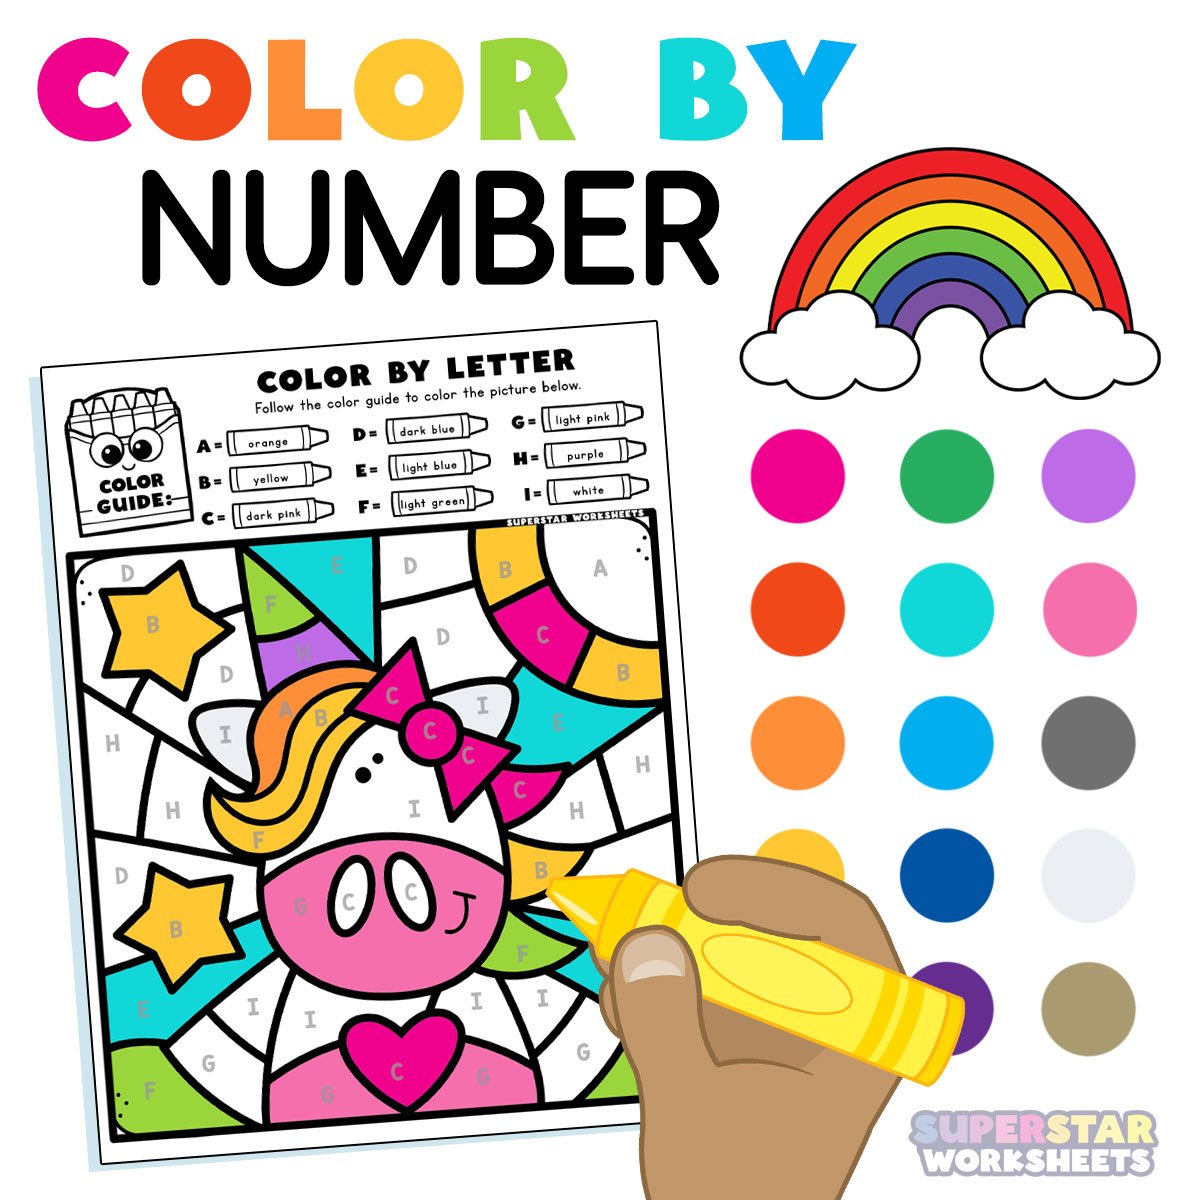 cornucopia color by number